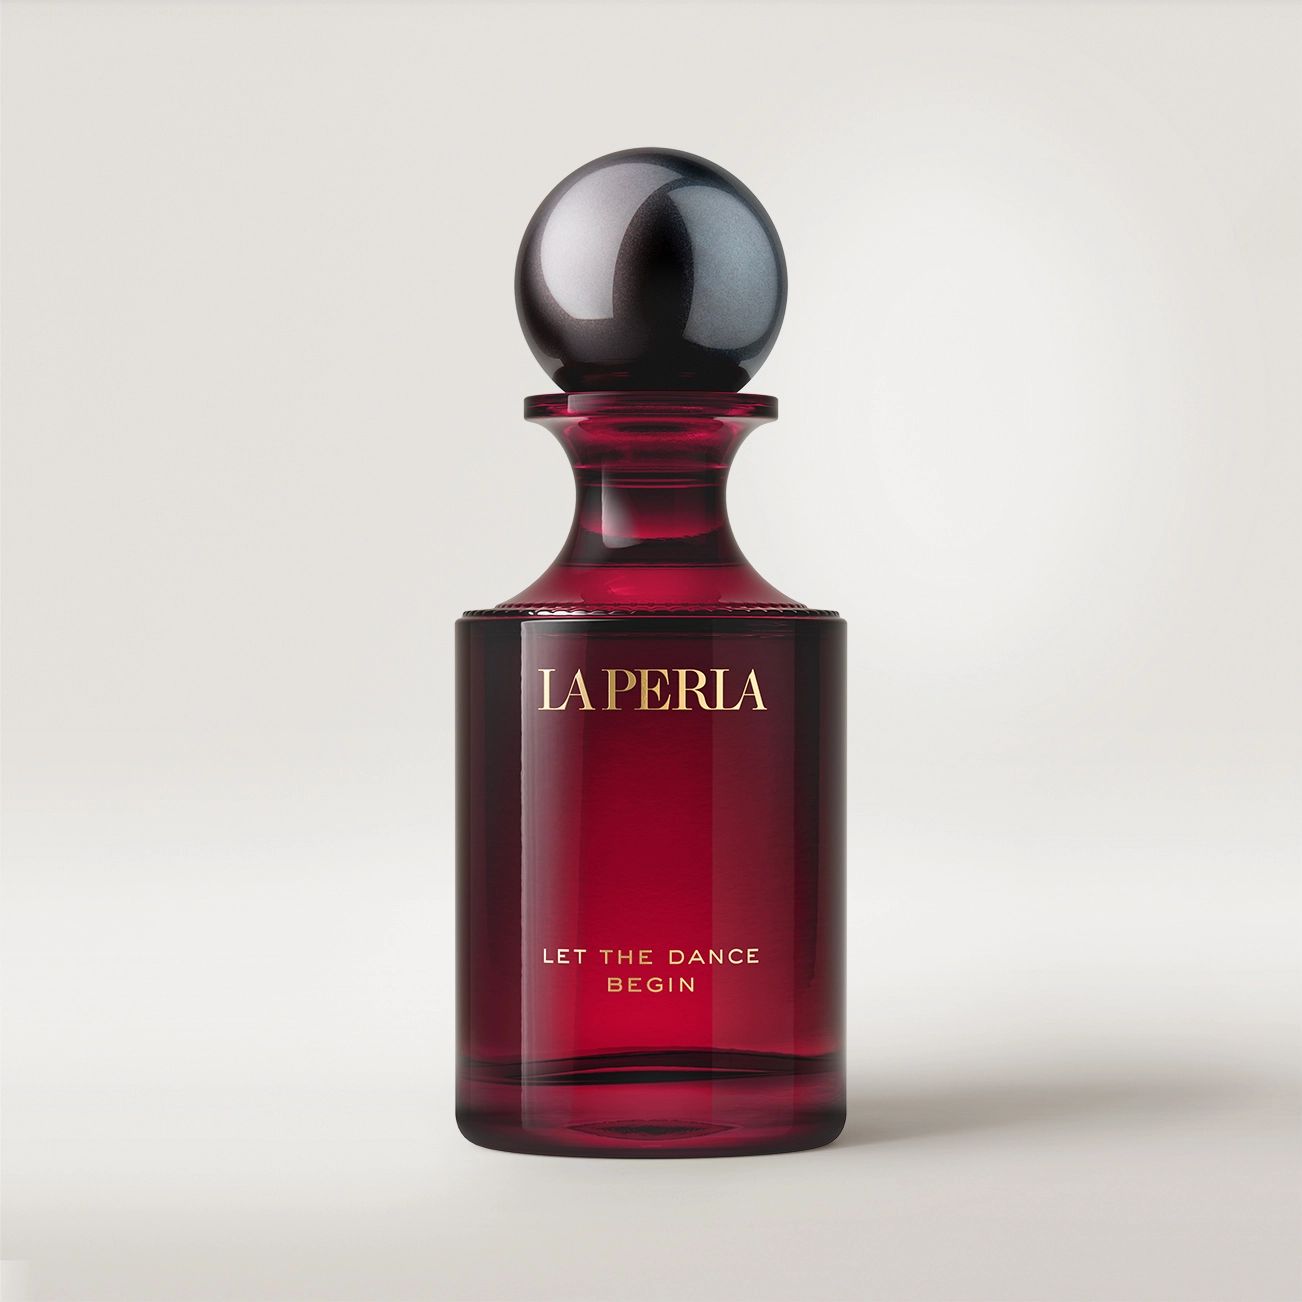 Let The Dance Begin La Perla perfume - a fragrance for women and men 2021